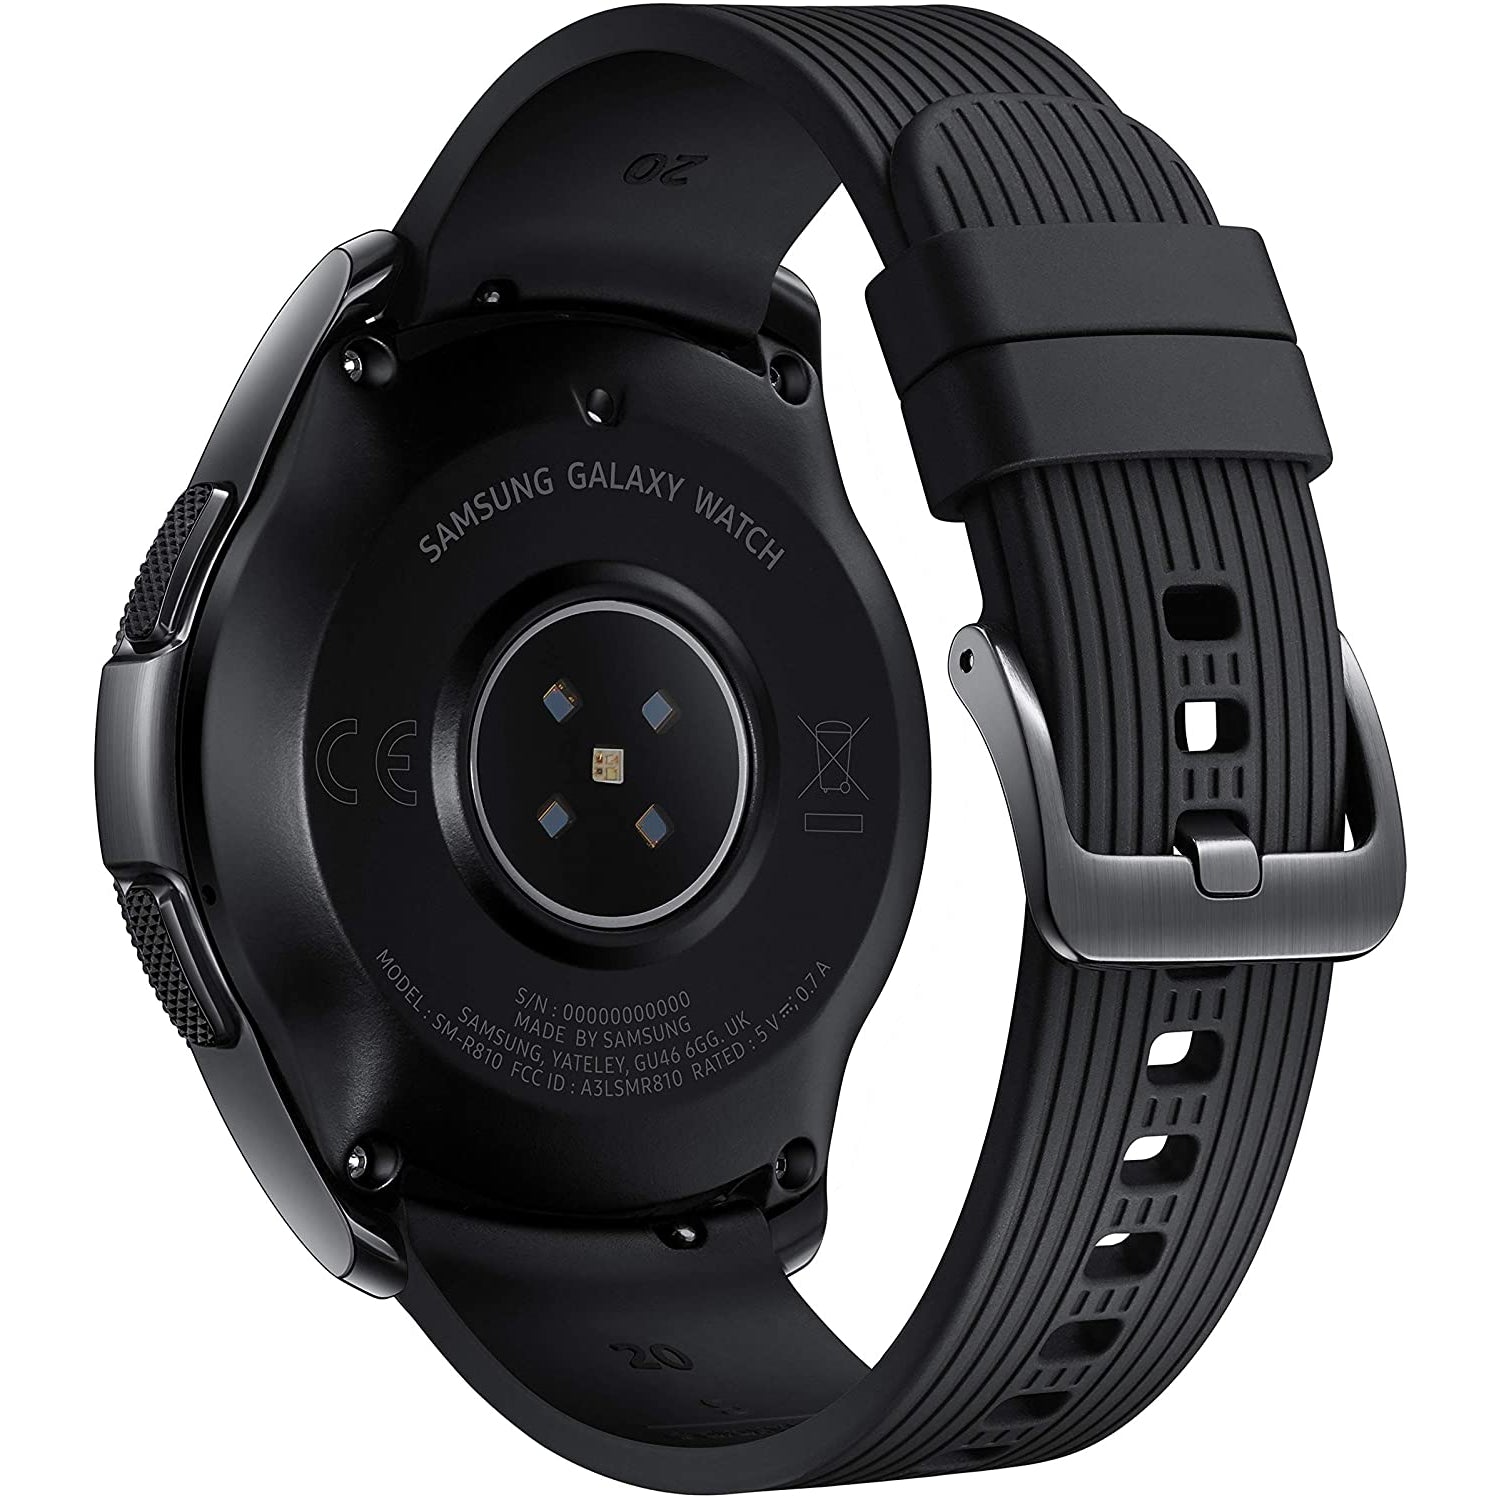 Samsung Galaxy Watch 42mm SM-R810 - Midnight Black - Refurbished Good